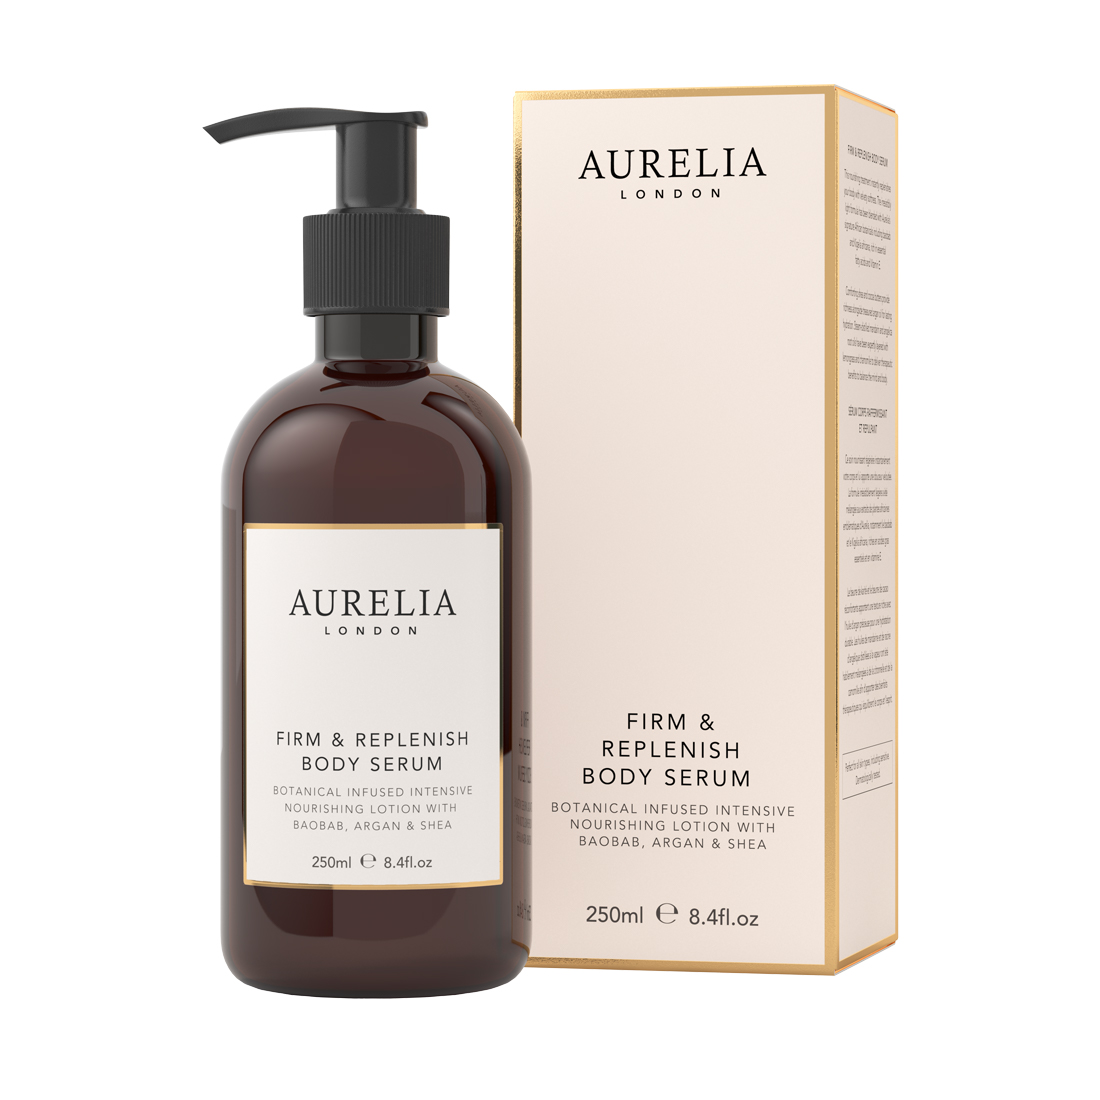 An image of Aurelia London, Firm & Replenish Body Serum, 250ml